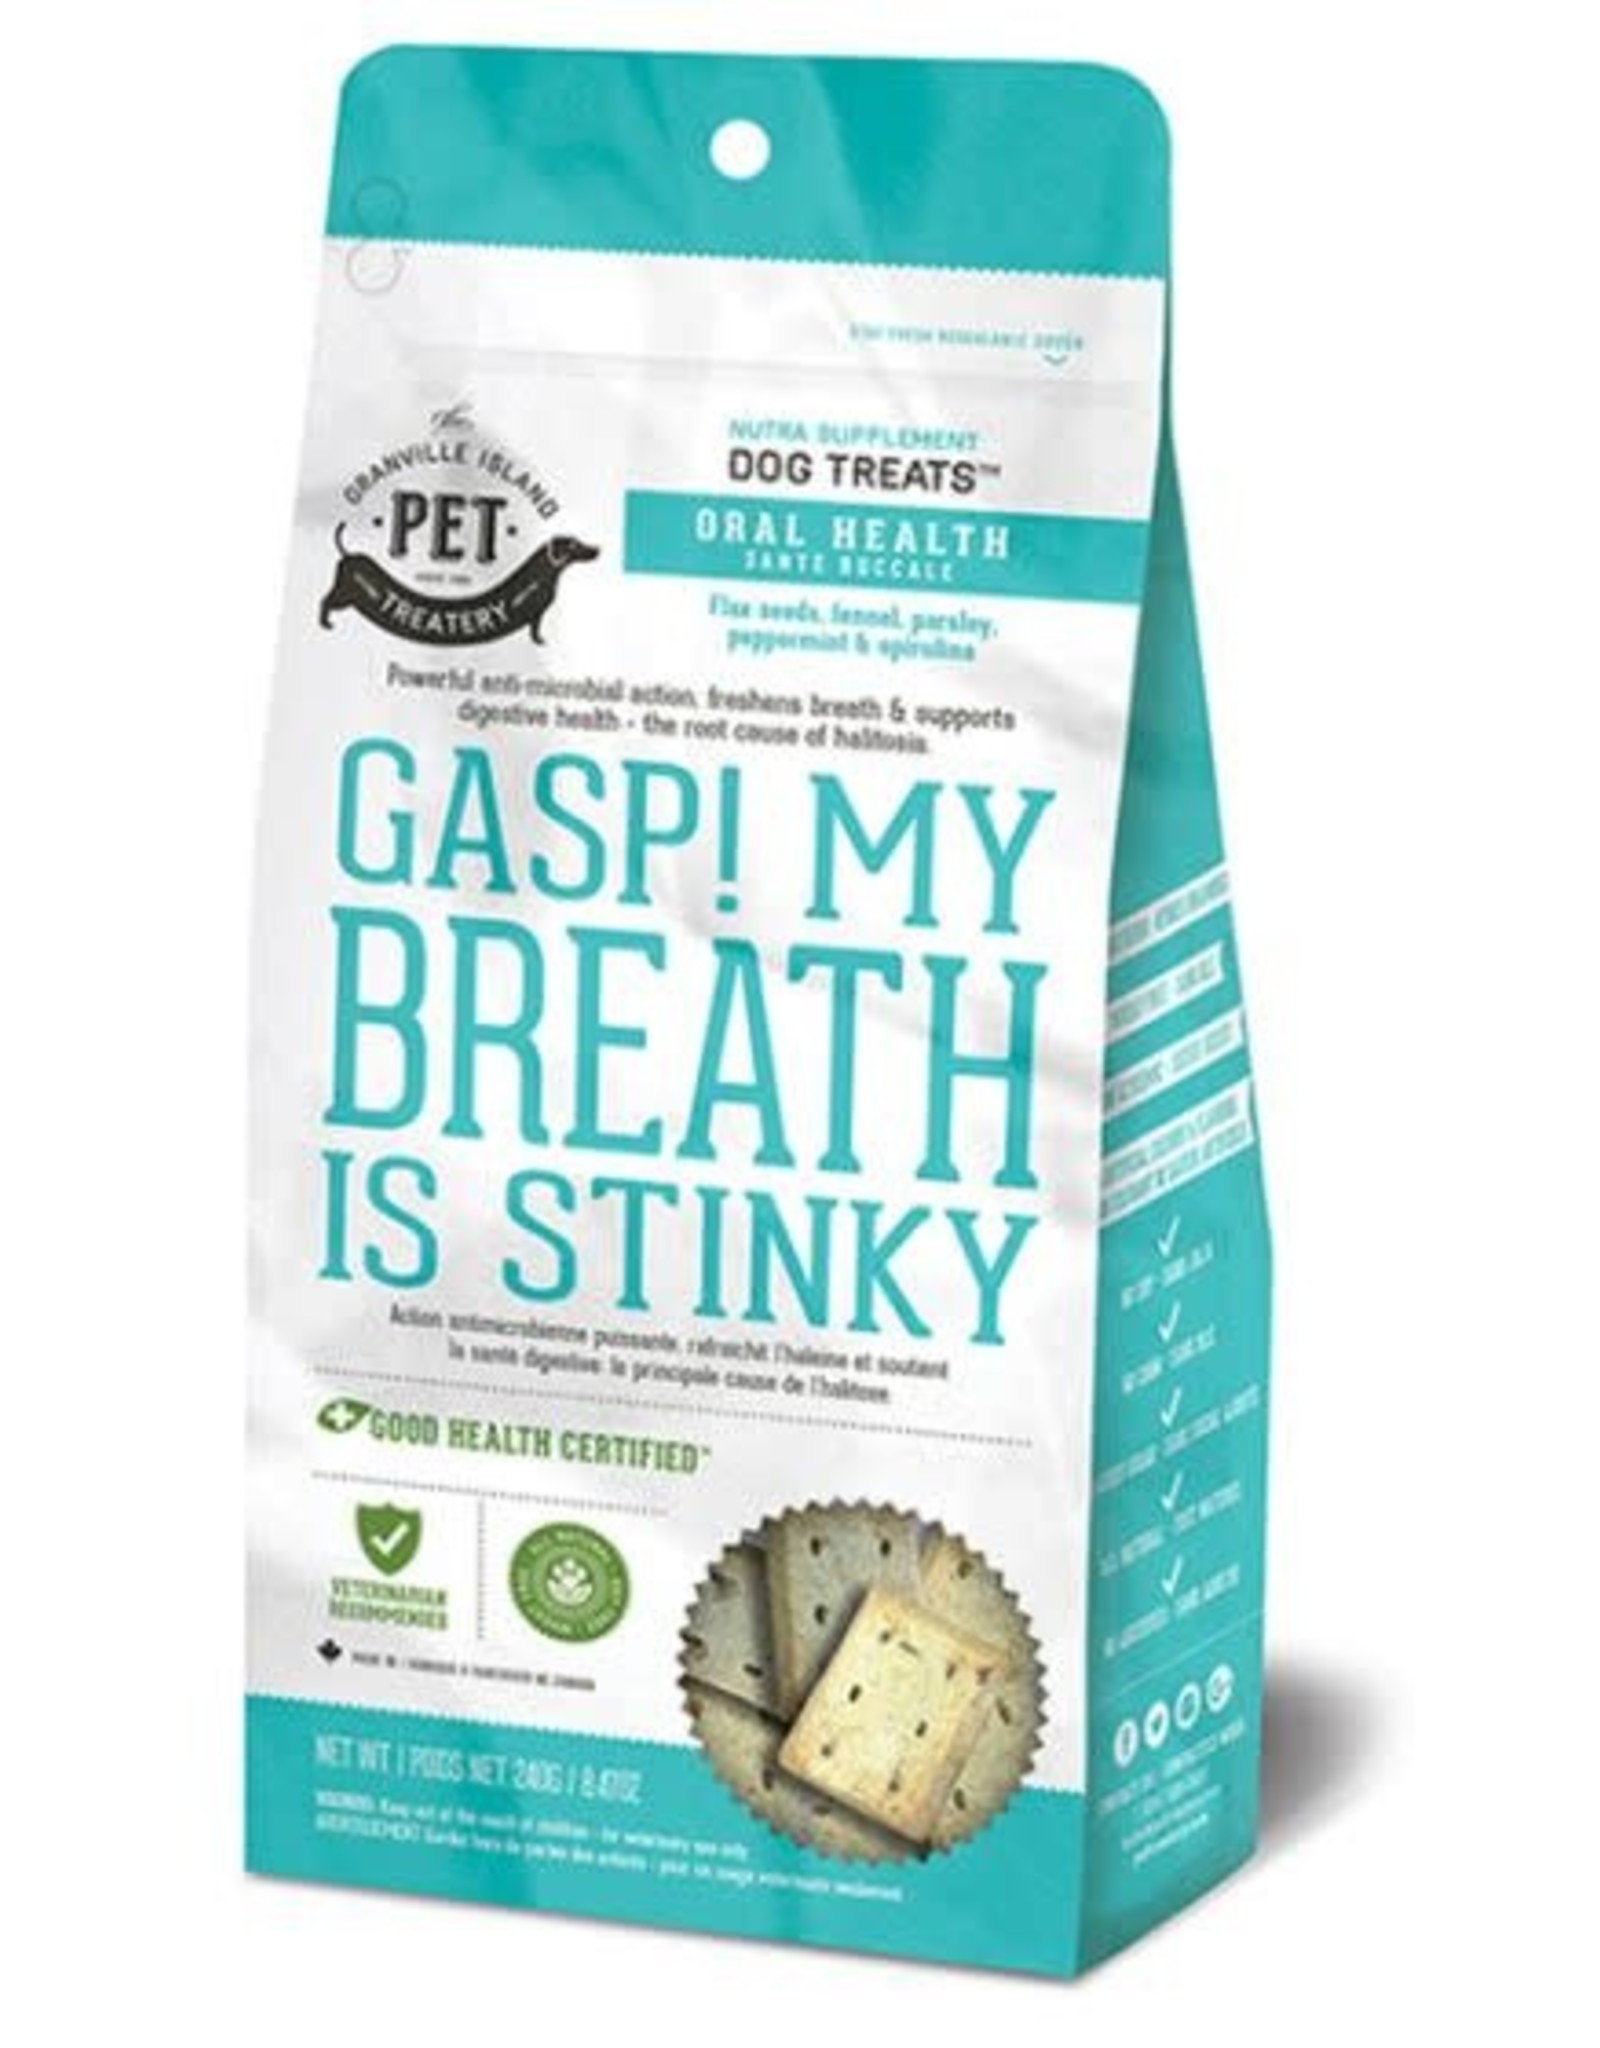 Granville Island Granville Oral Health Treats Gasp My Breath Is Stinky Dog 240g